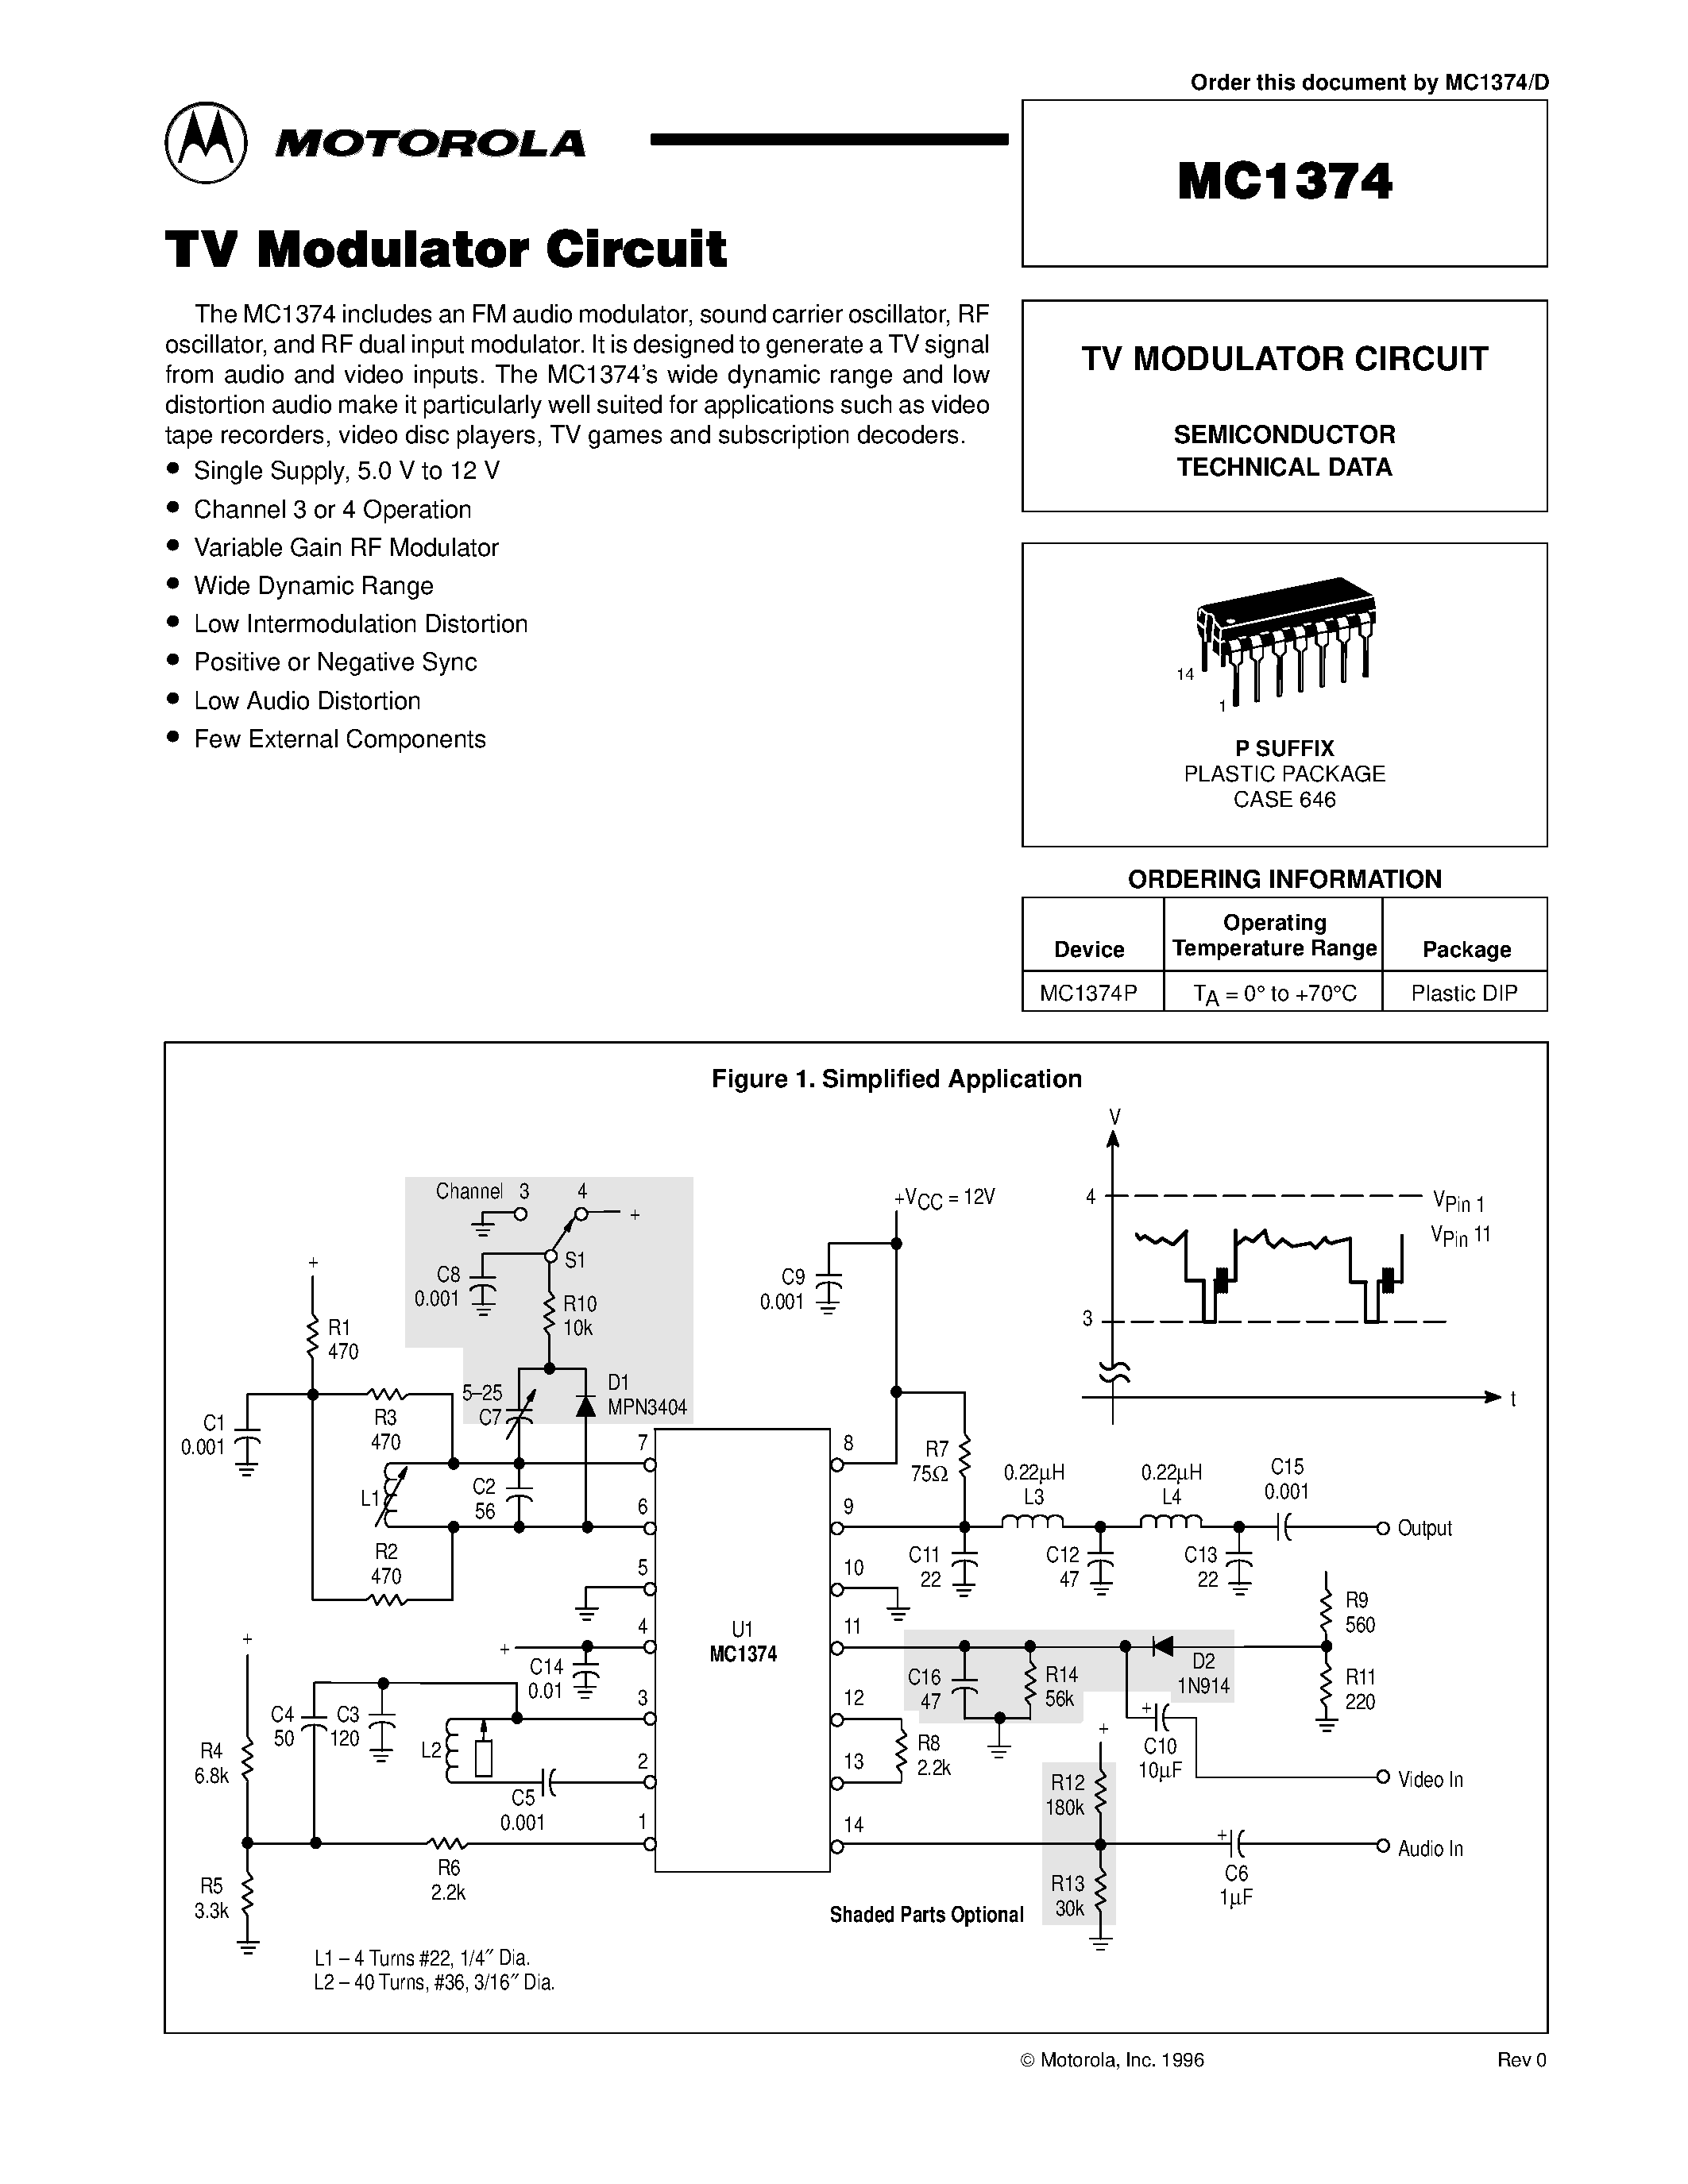 Datasheet MC1374P - TV MODULATOR CIRCUIT page 1